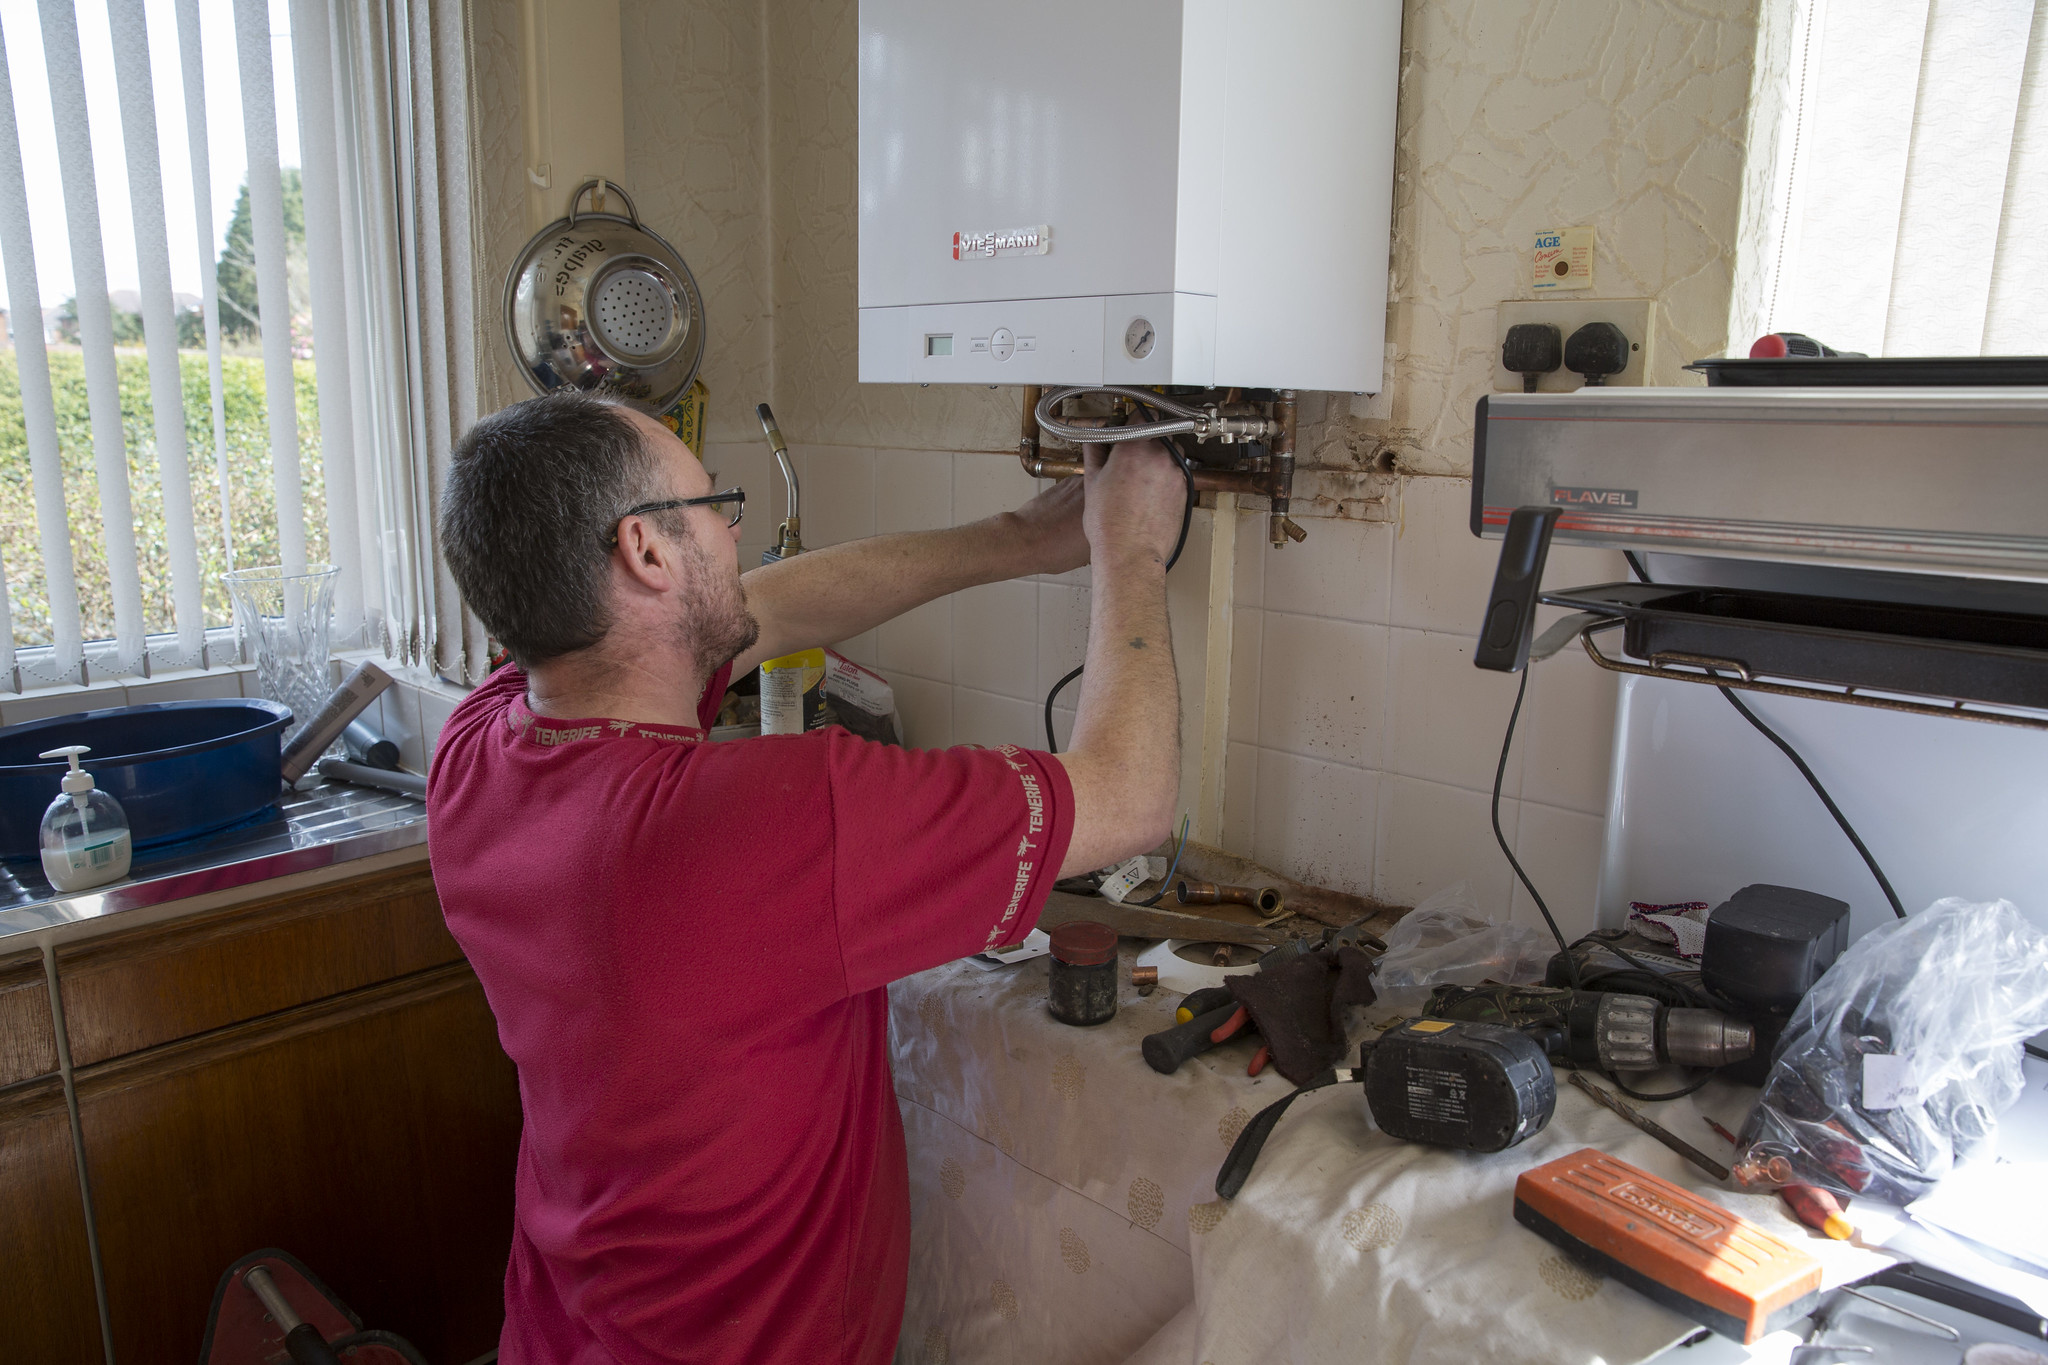 Man working on Viessmann heat pump in a kitchen full of tools.